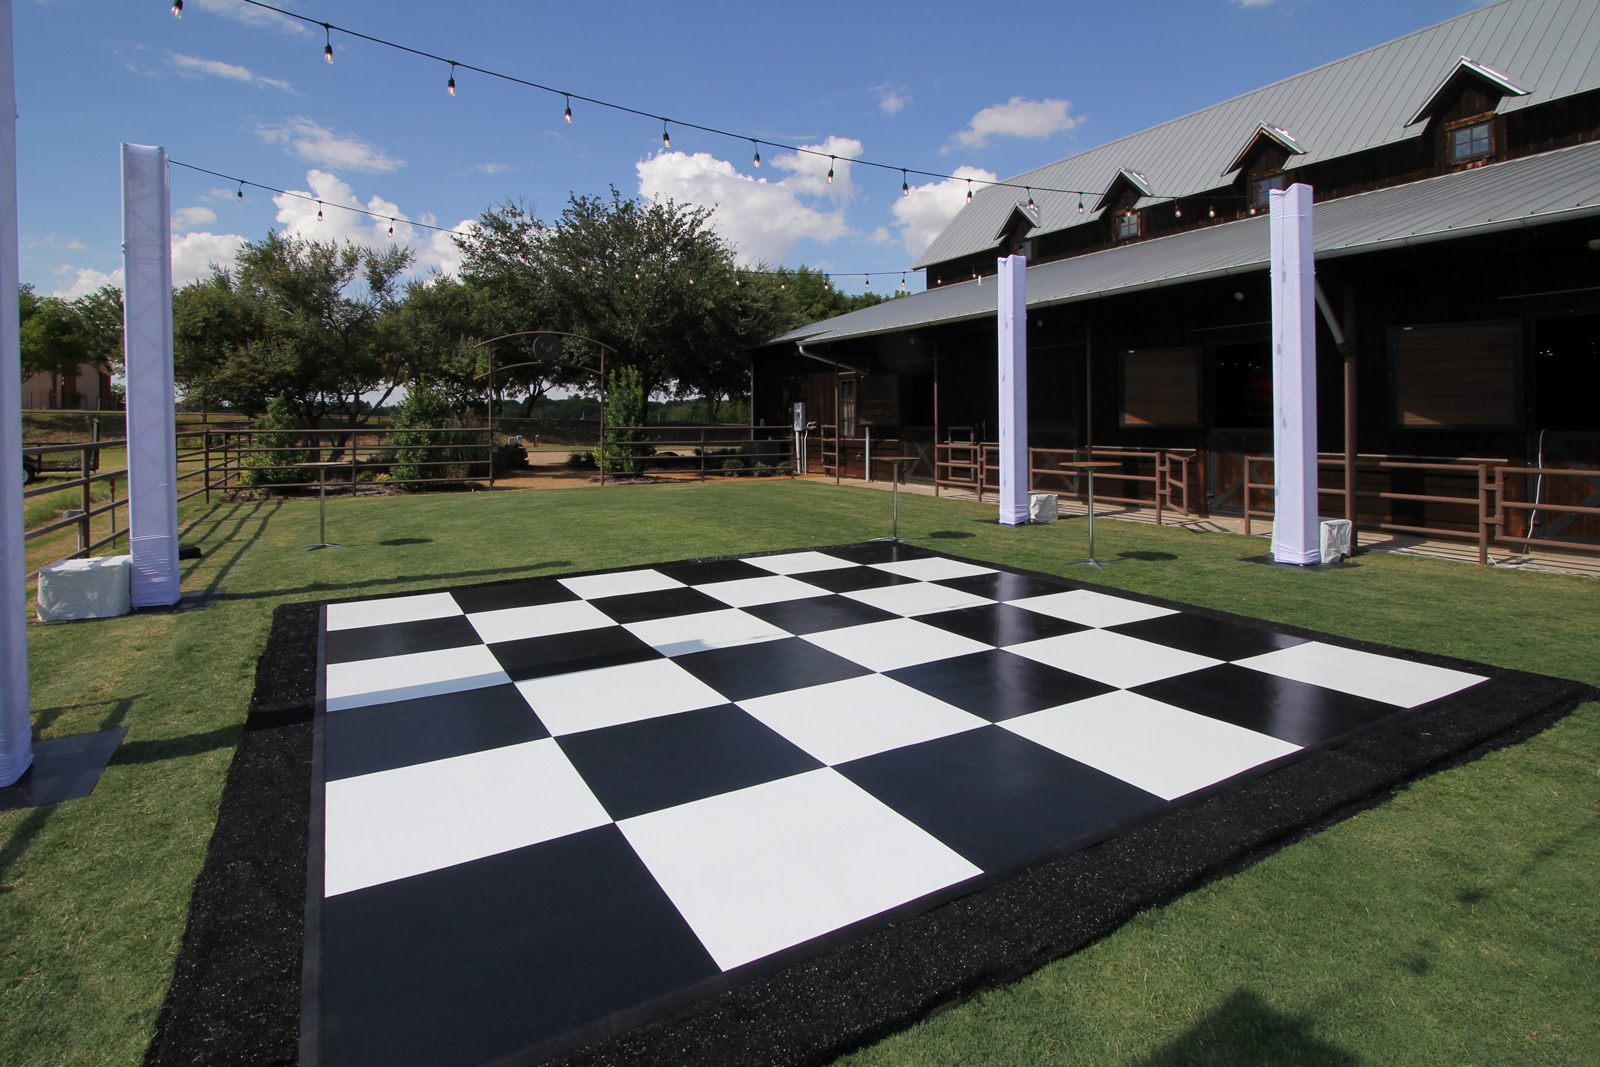 Slate black and white plus dance floor at a farm event venue